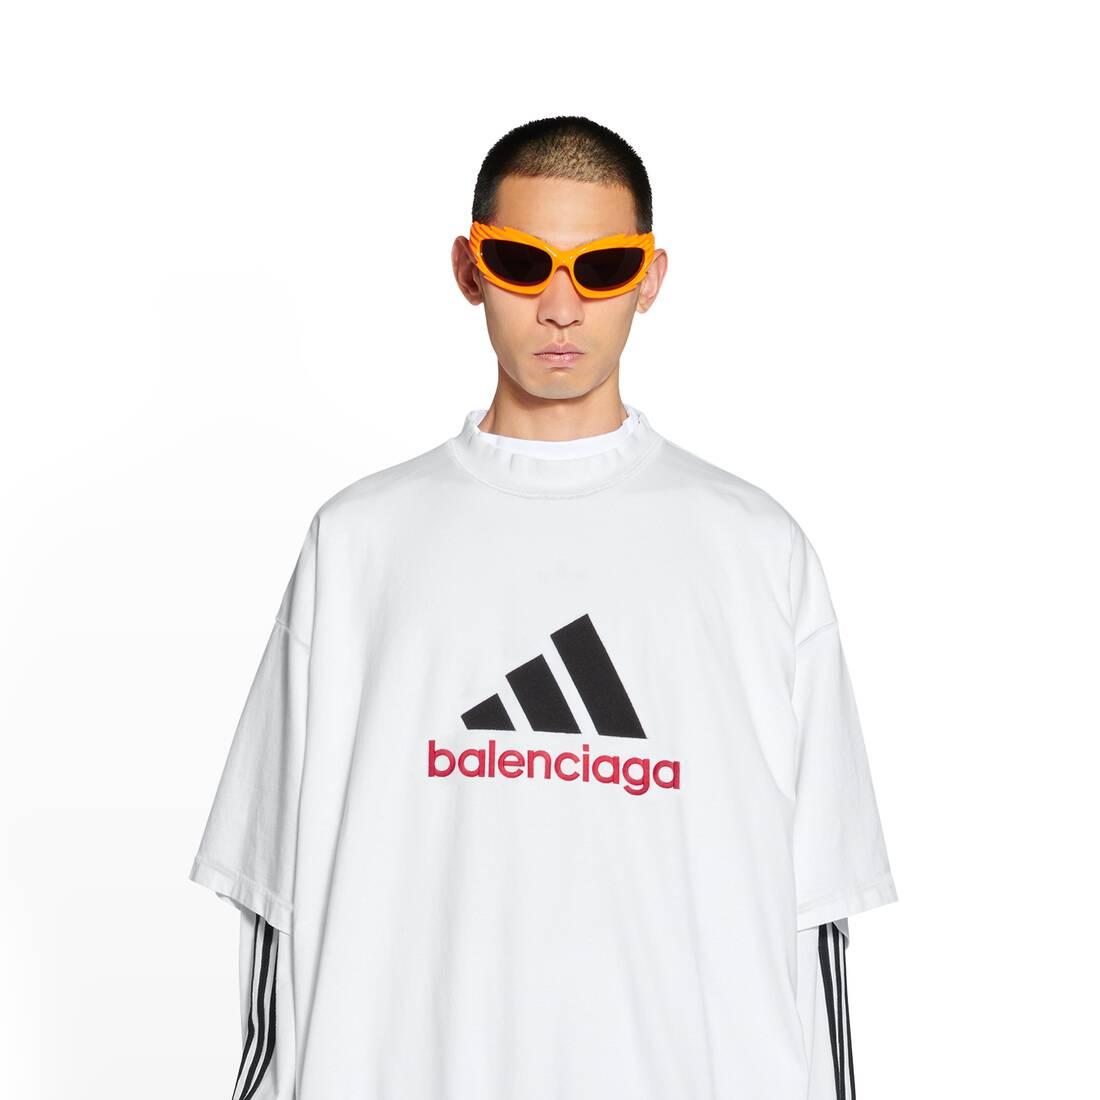 Balenciaga / Adidas T-shirt Oversized in White | Lyst